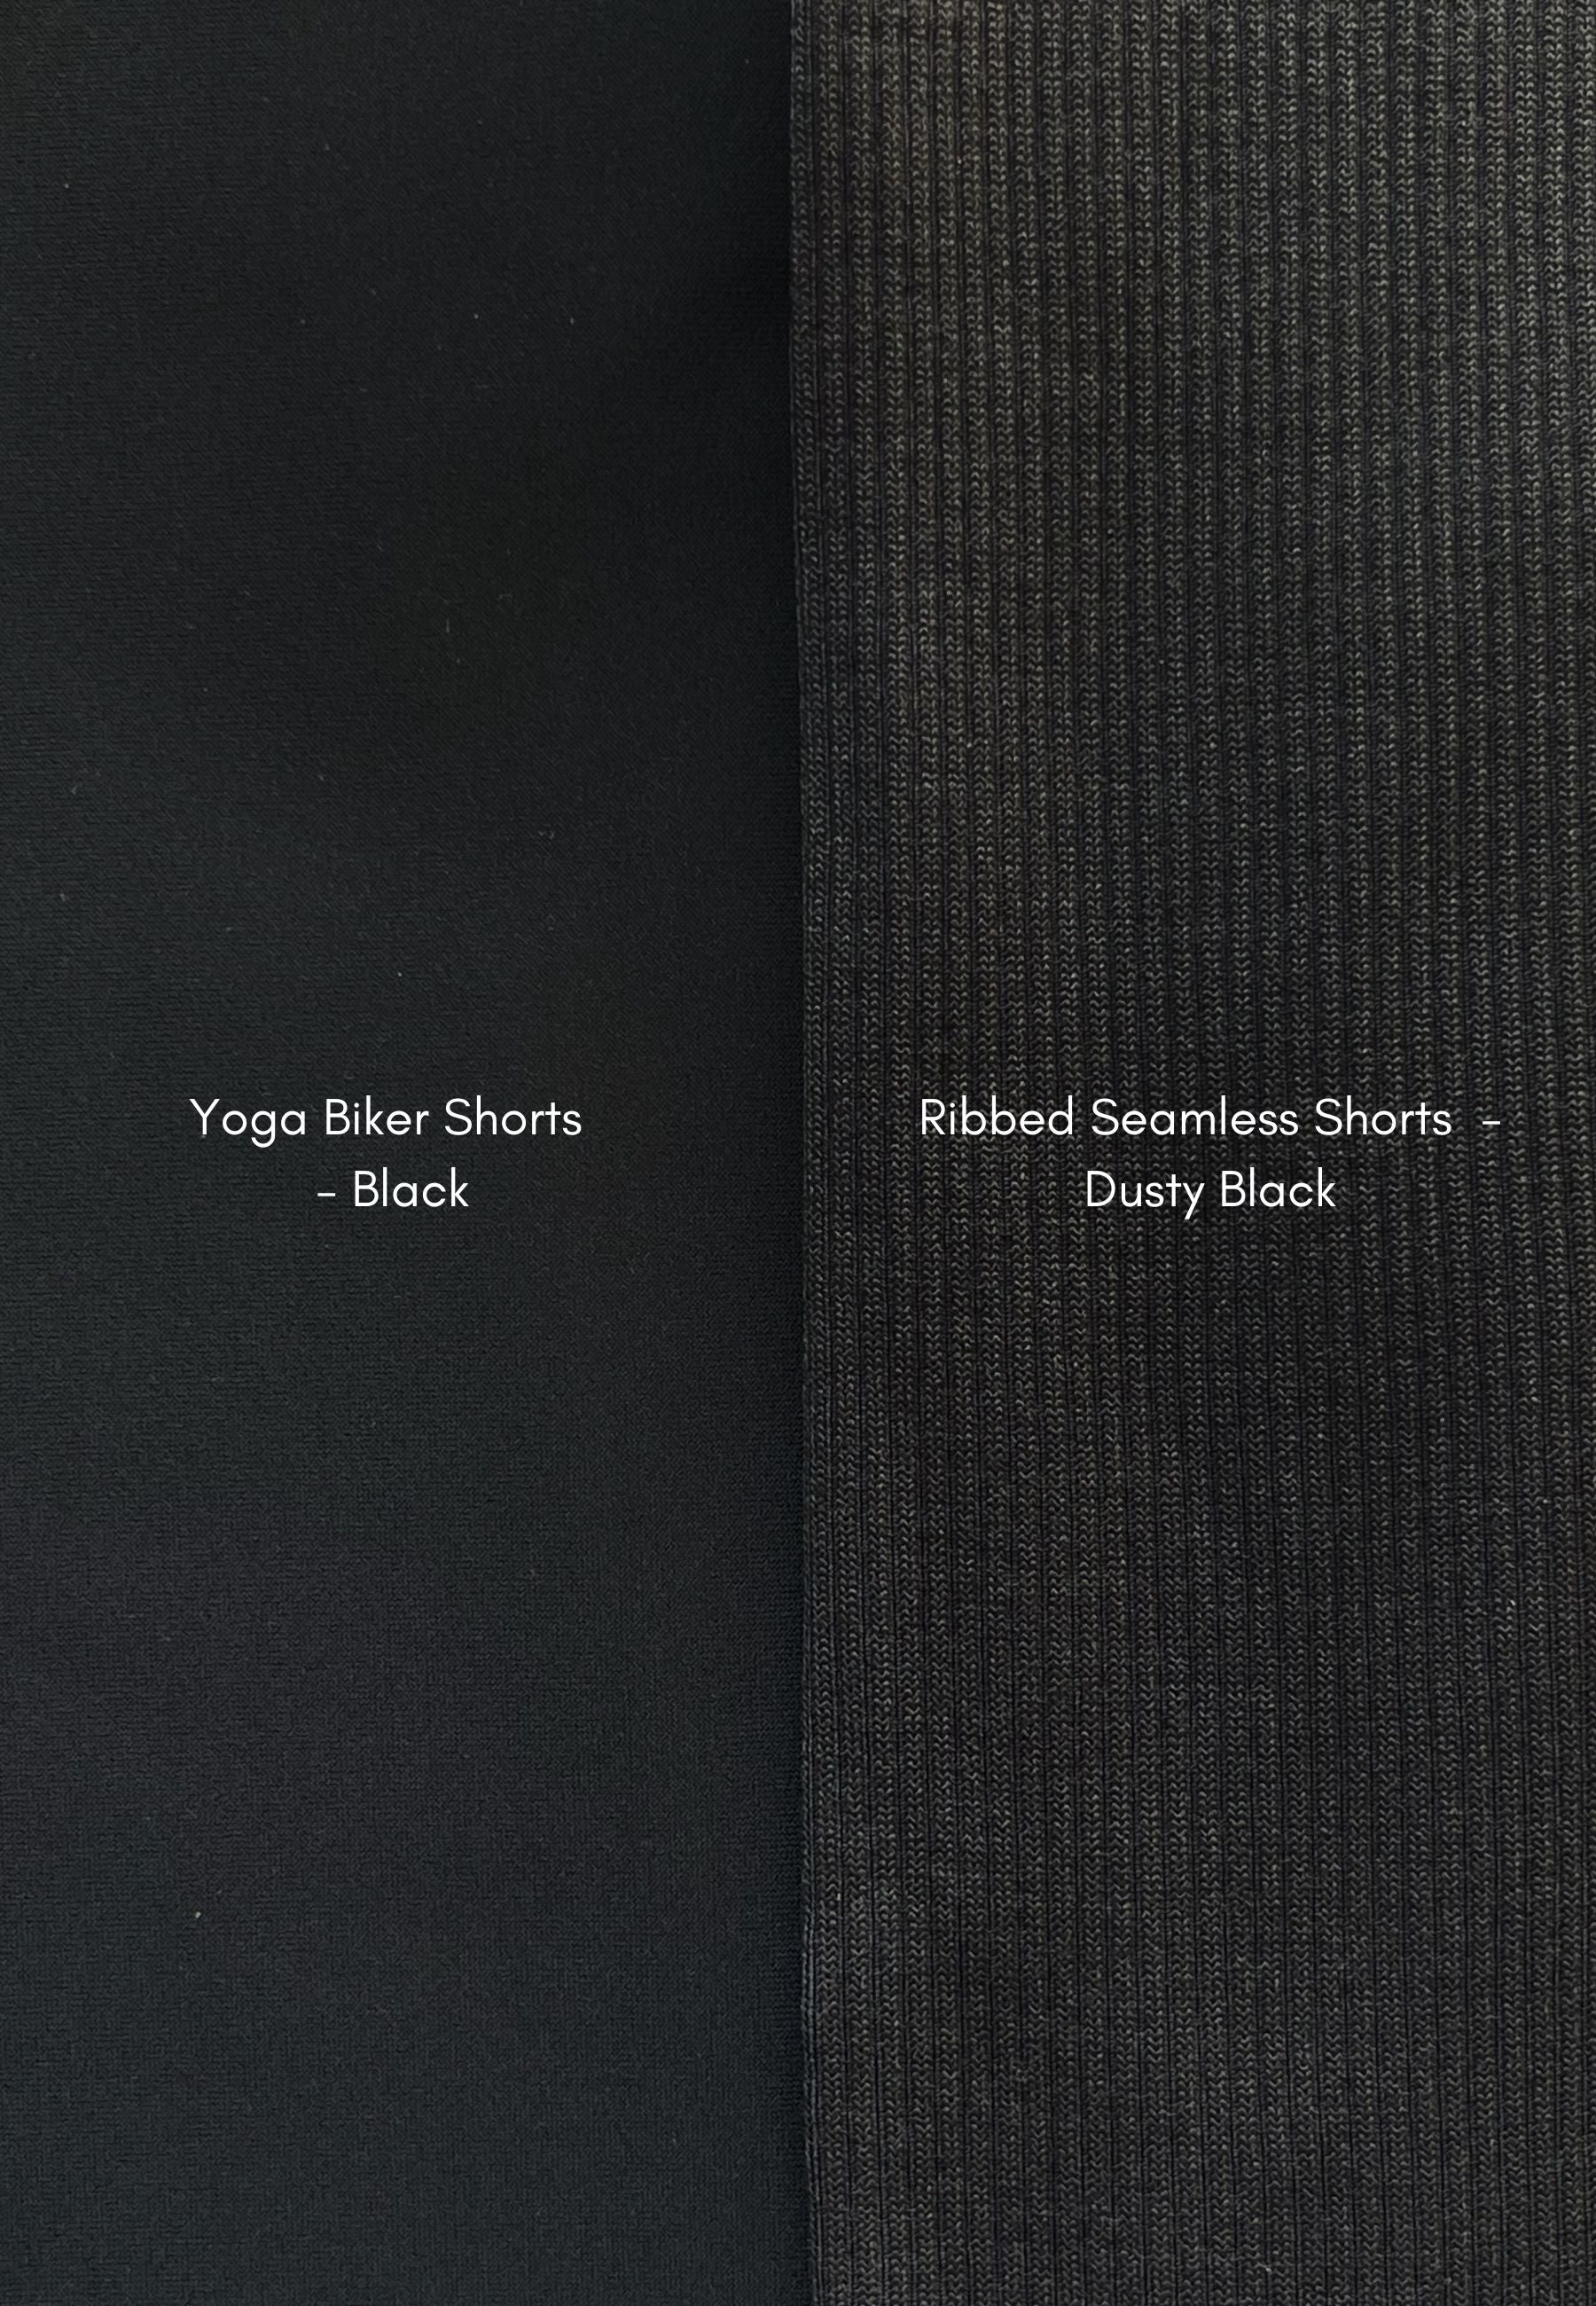 Ribbes Seamless Shorts - Dusty Black Color description 